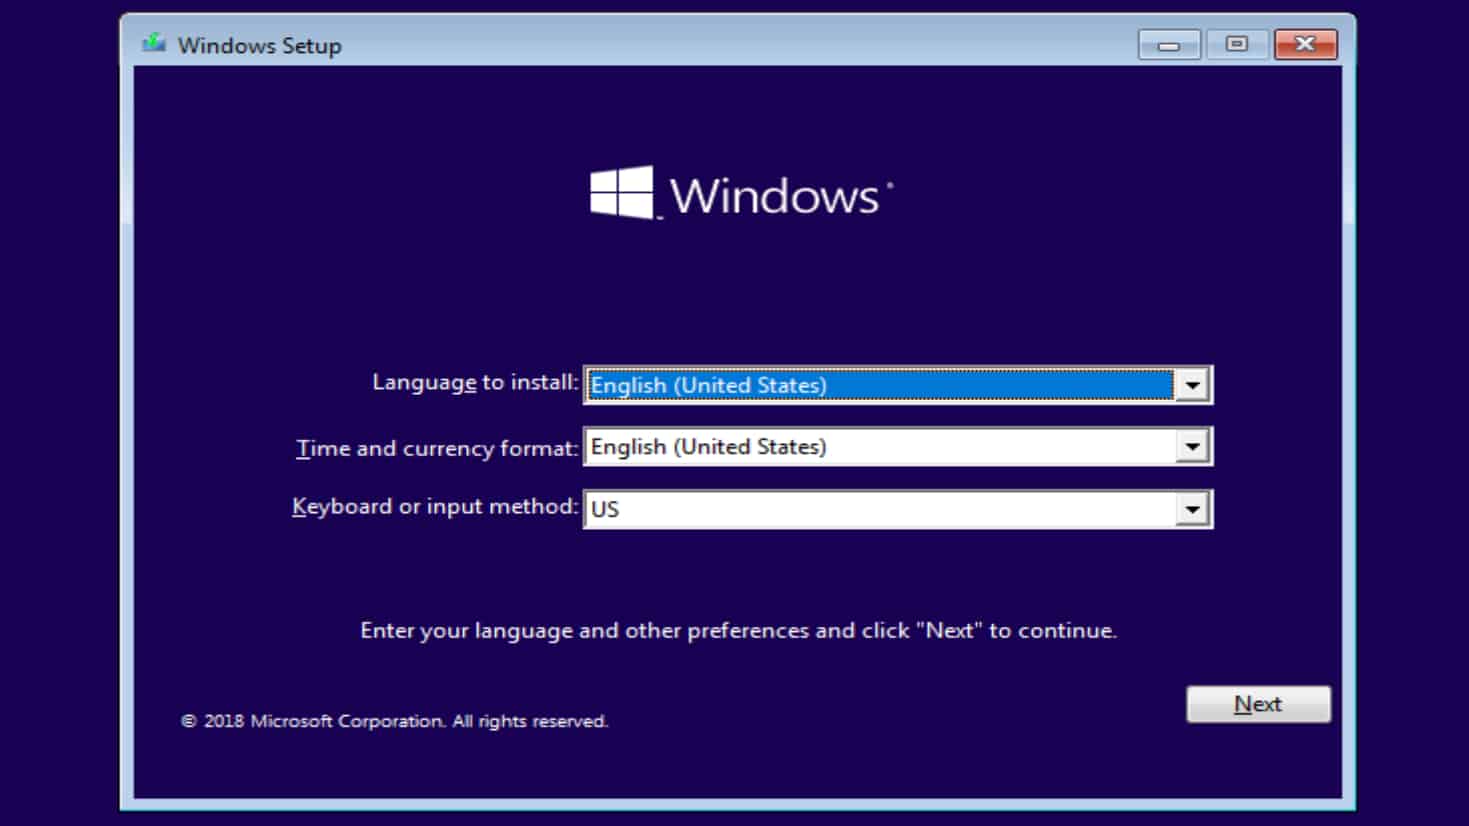 Windows 10 install prompt